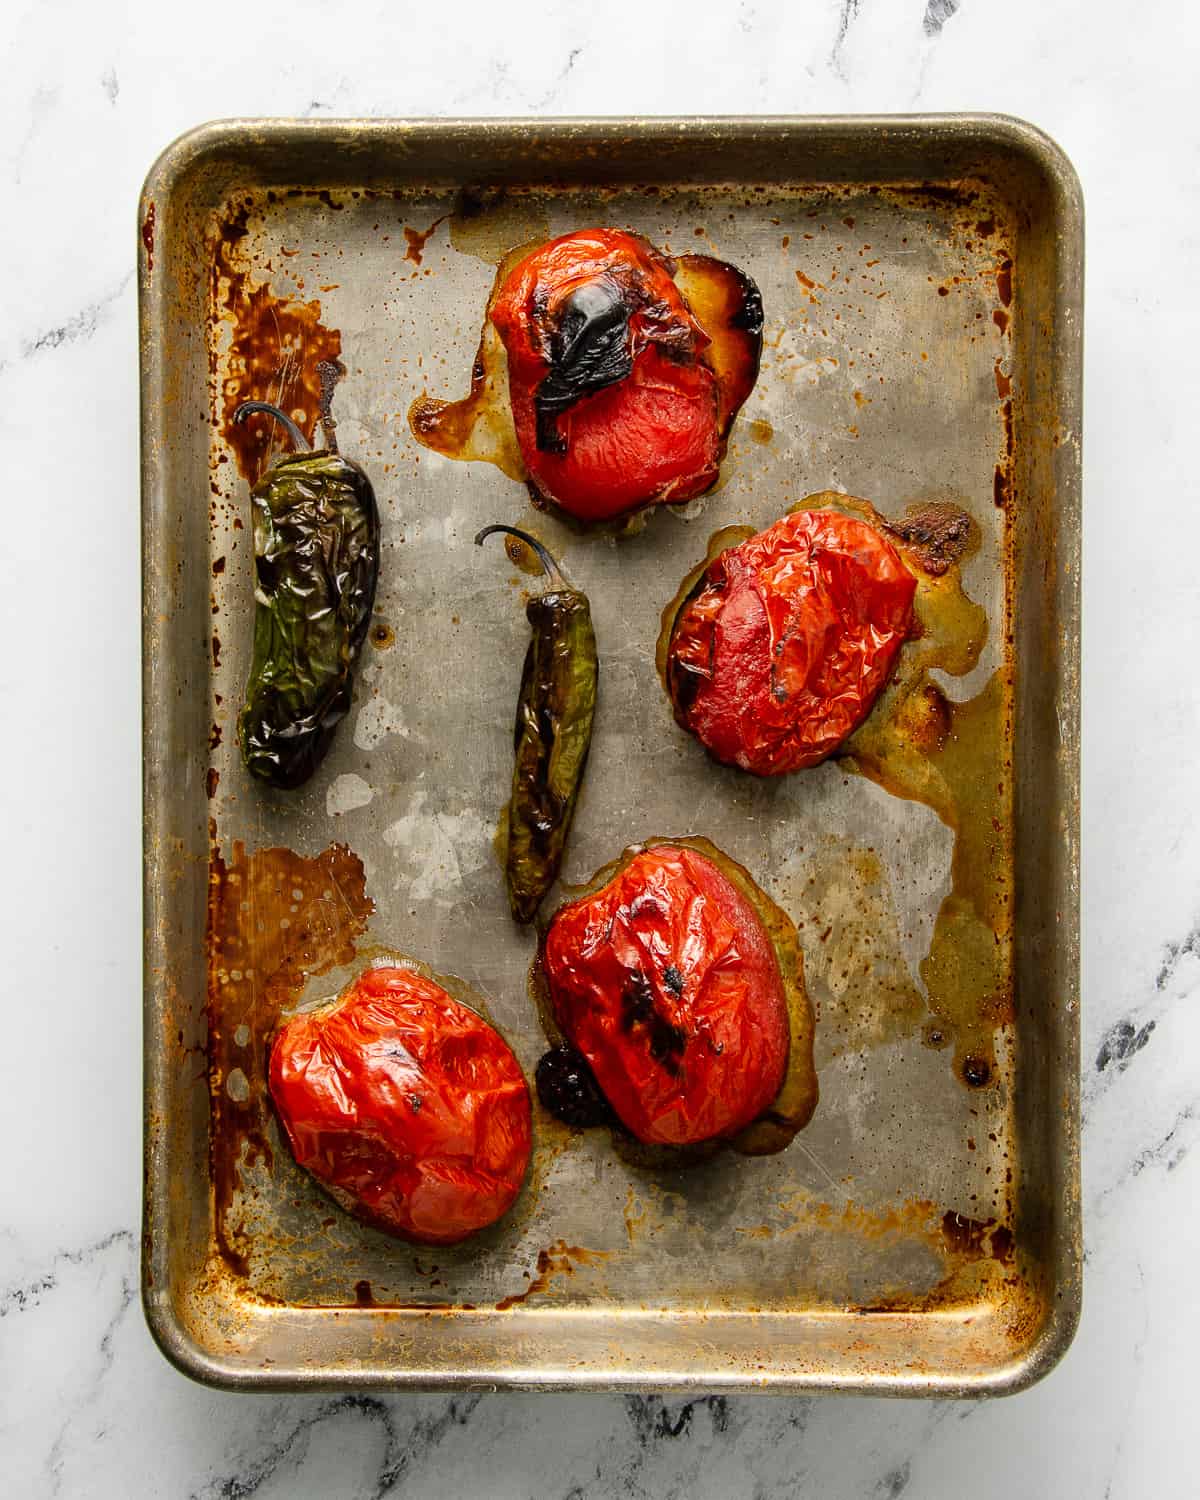 Broiled roma tomates, jalapeno and a serrano on an aluminum baking tray.